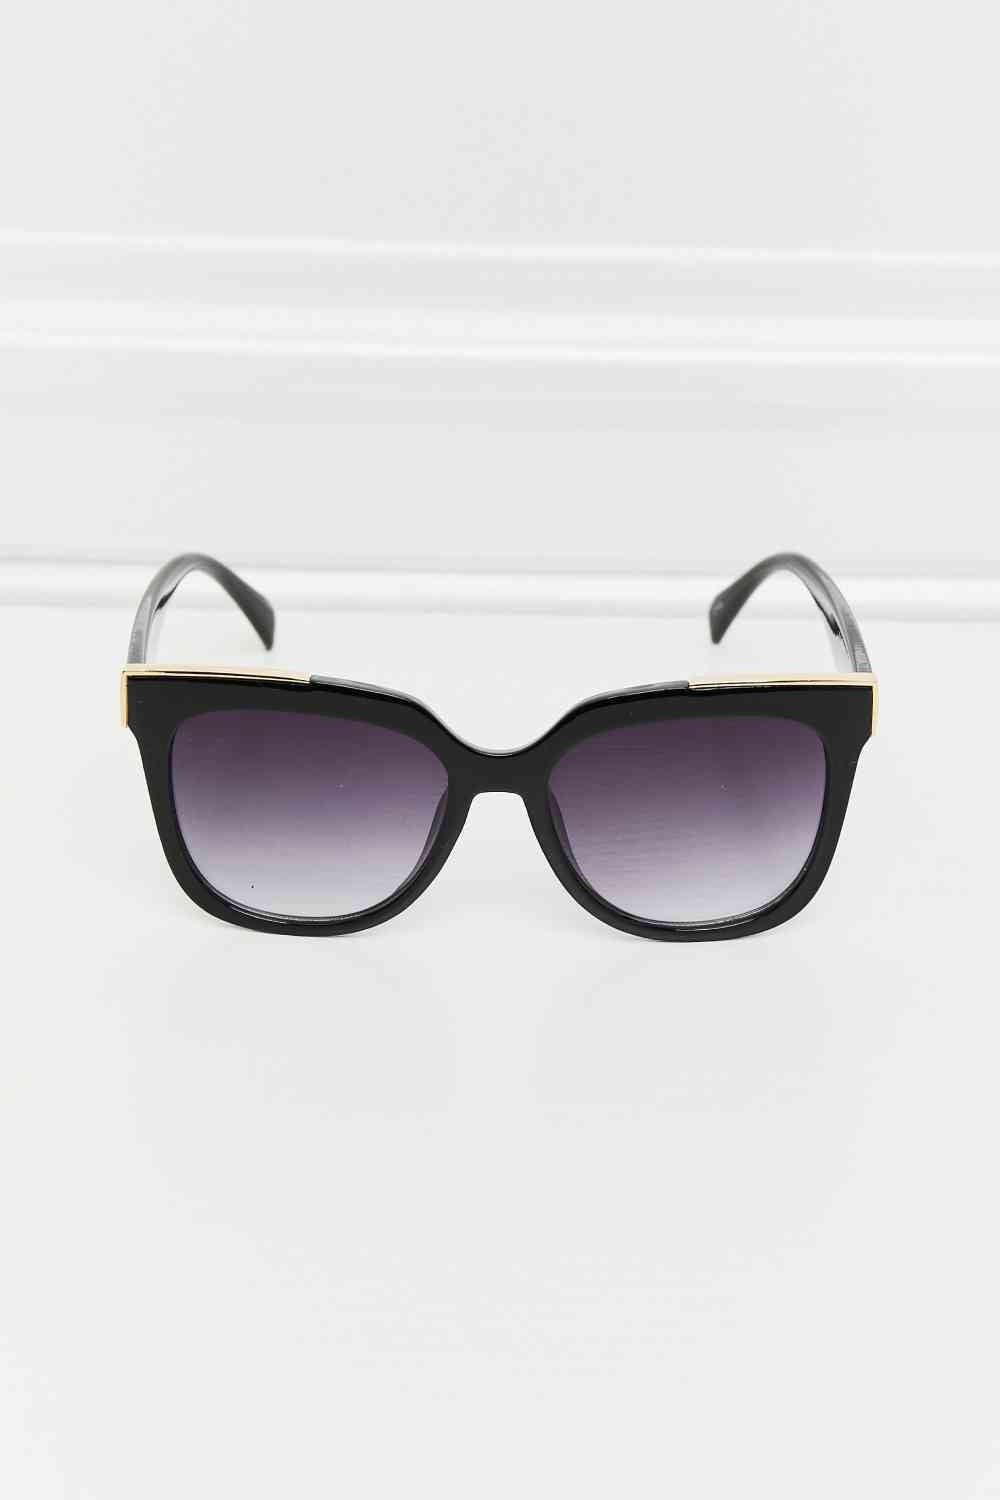 TEEK - Accent Full Rim Sunglasses EYEGLASSES TEEK Trend   